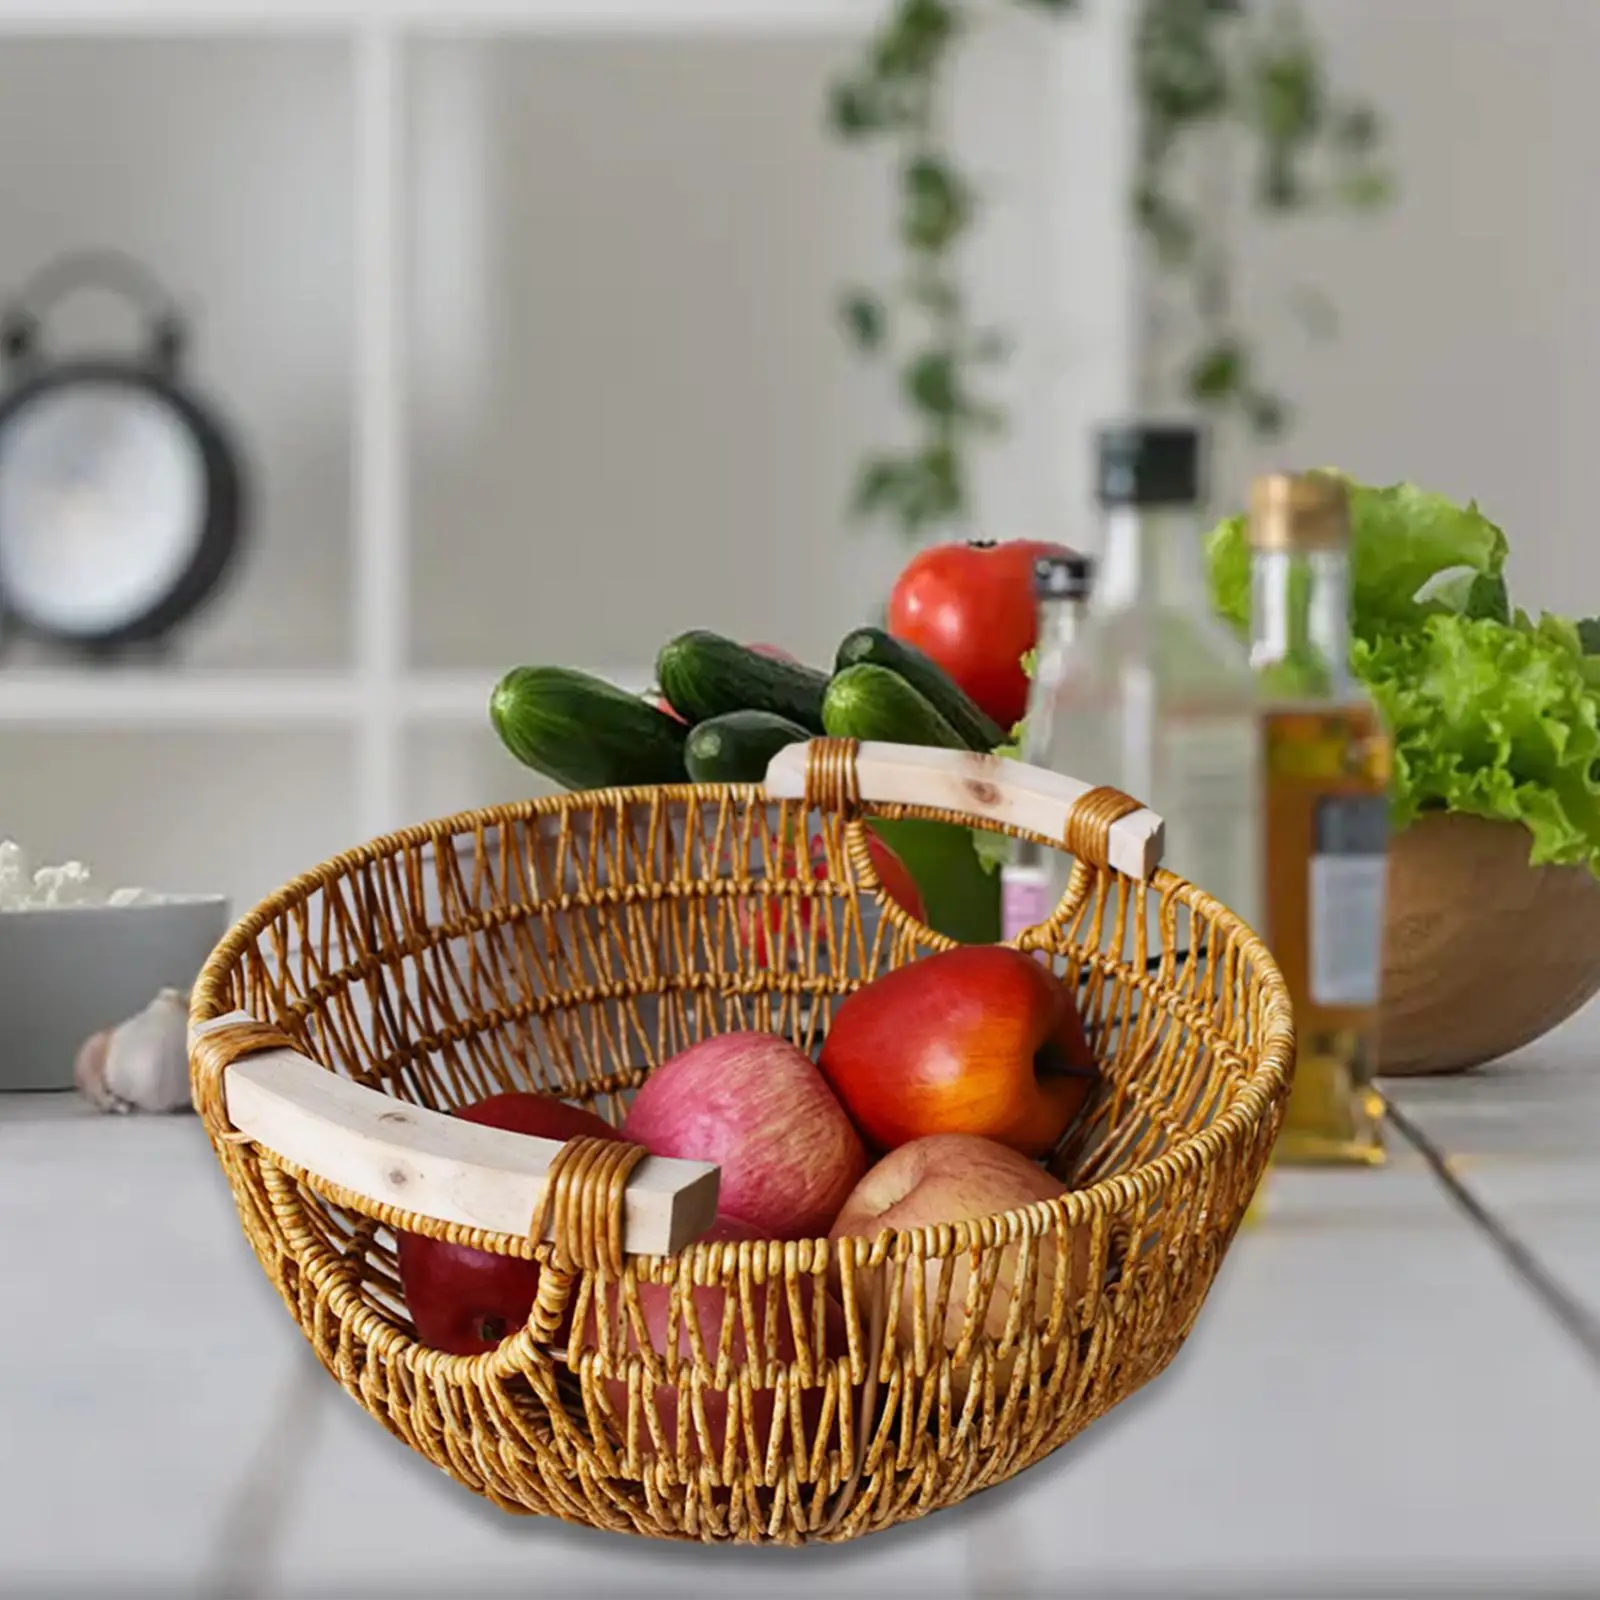 Fruit Basket Woven Body Sturdy Camping Basket with Double Handles Hamper Basket Woven Basket Vegetable Basket for Garden Home